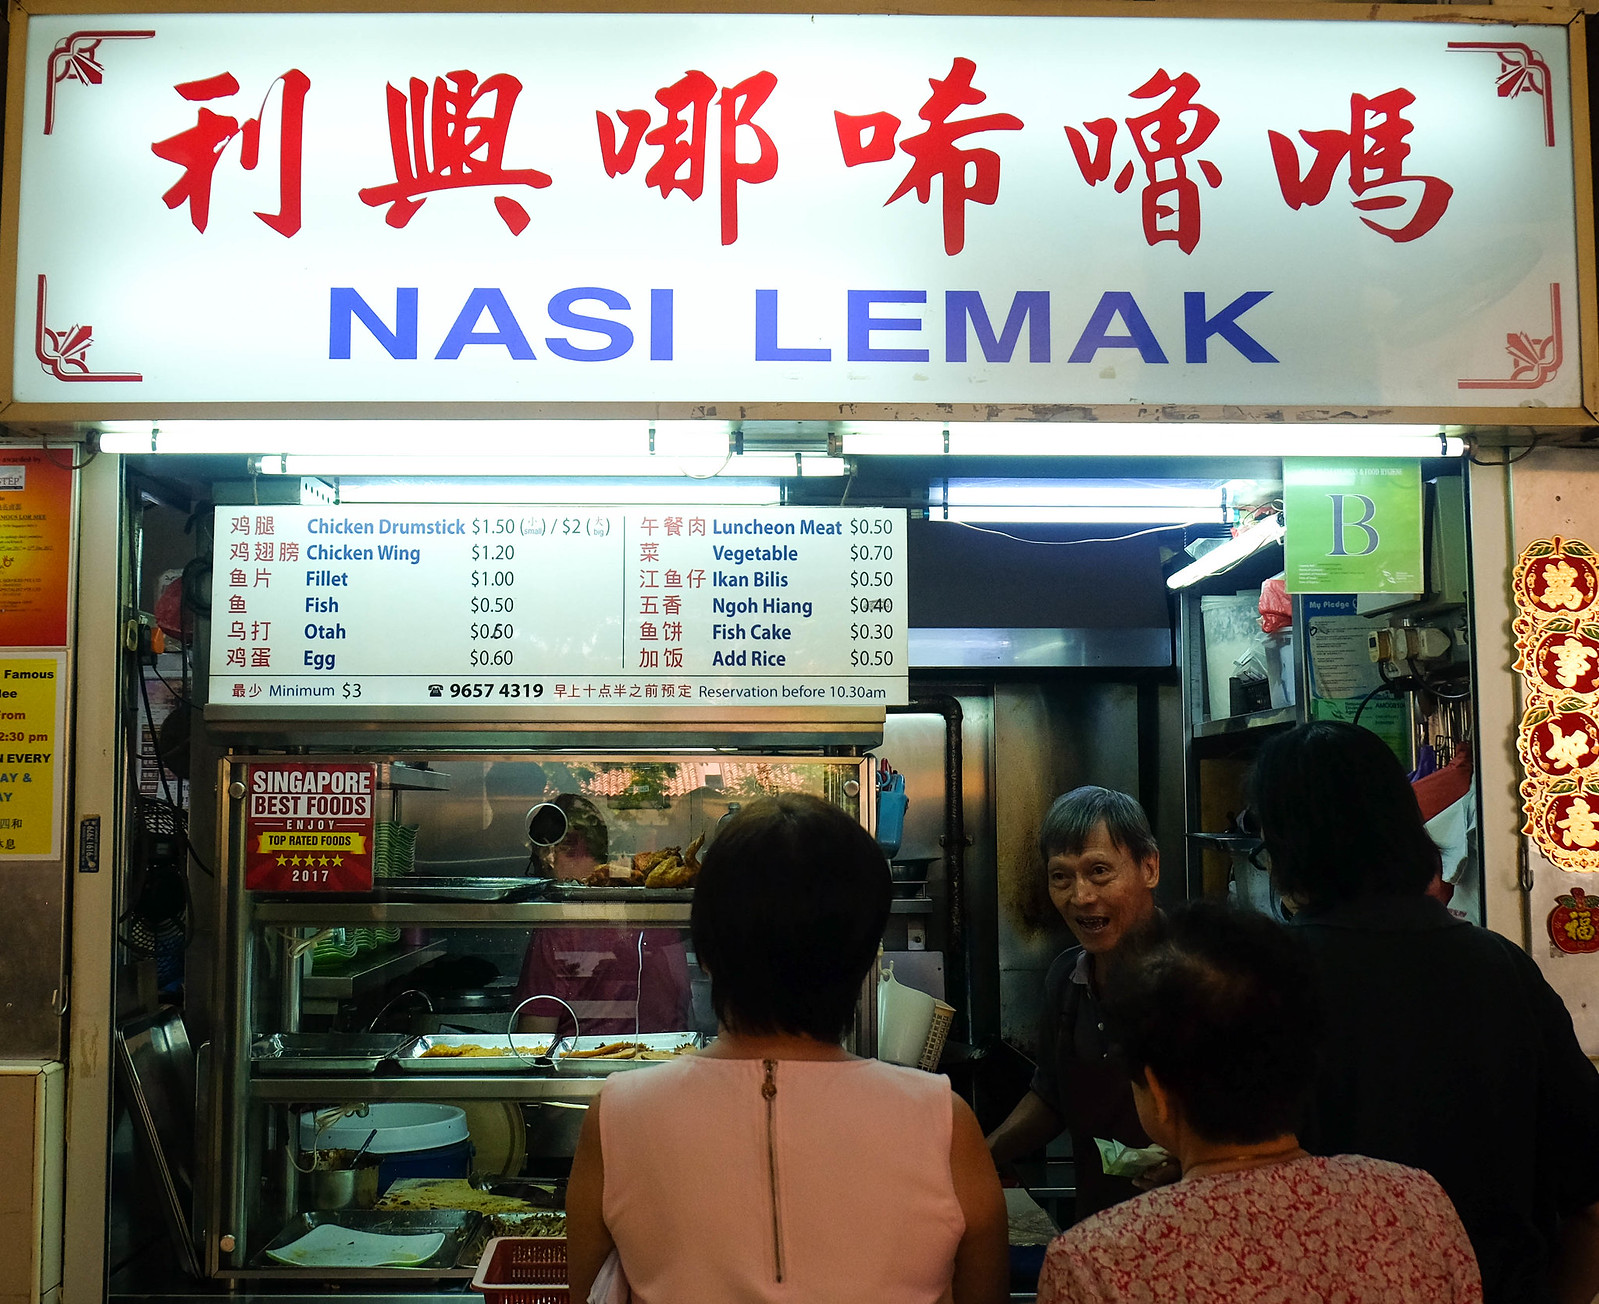 amoy street food centre Nasi Lemak stall